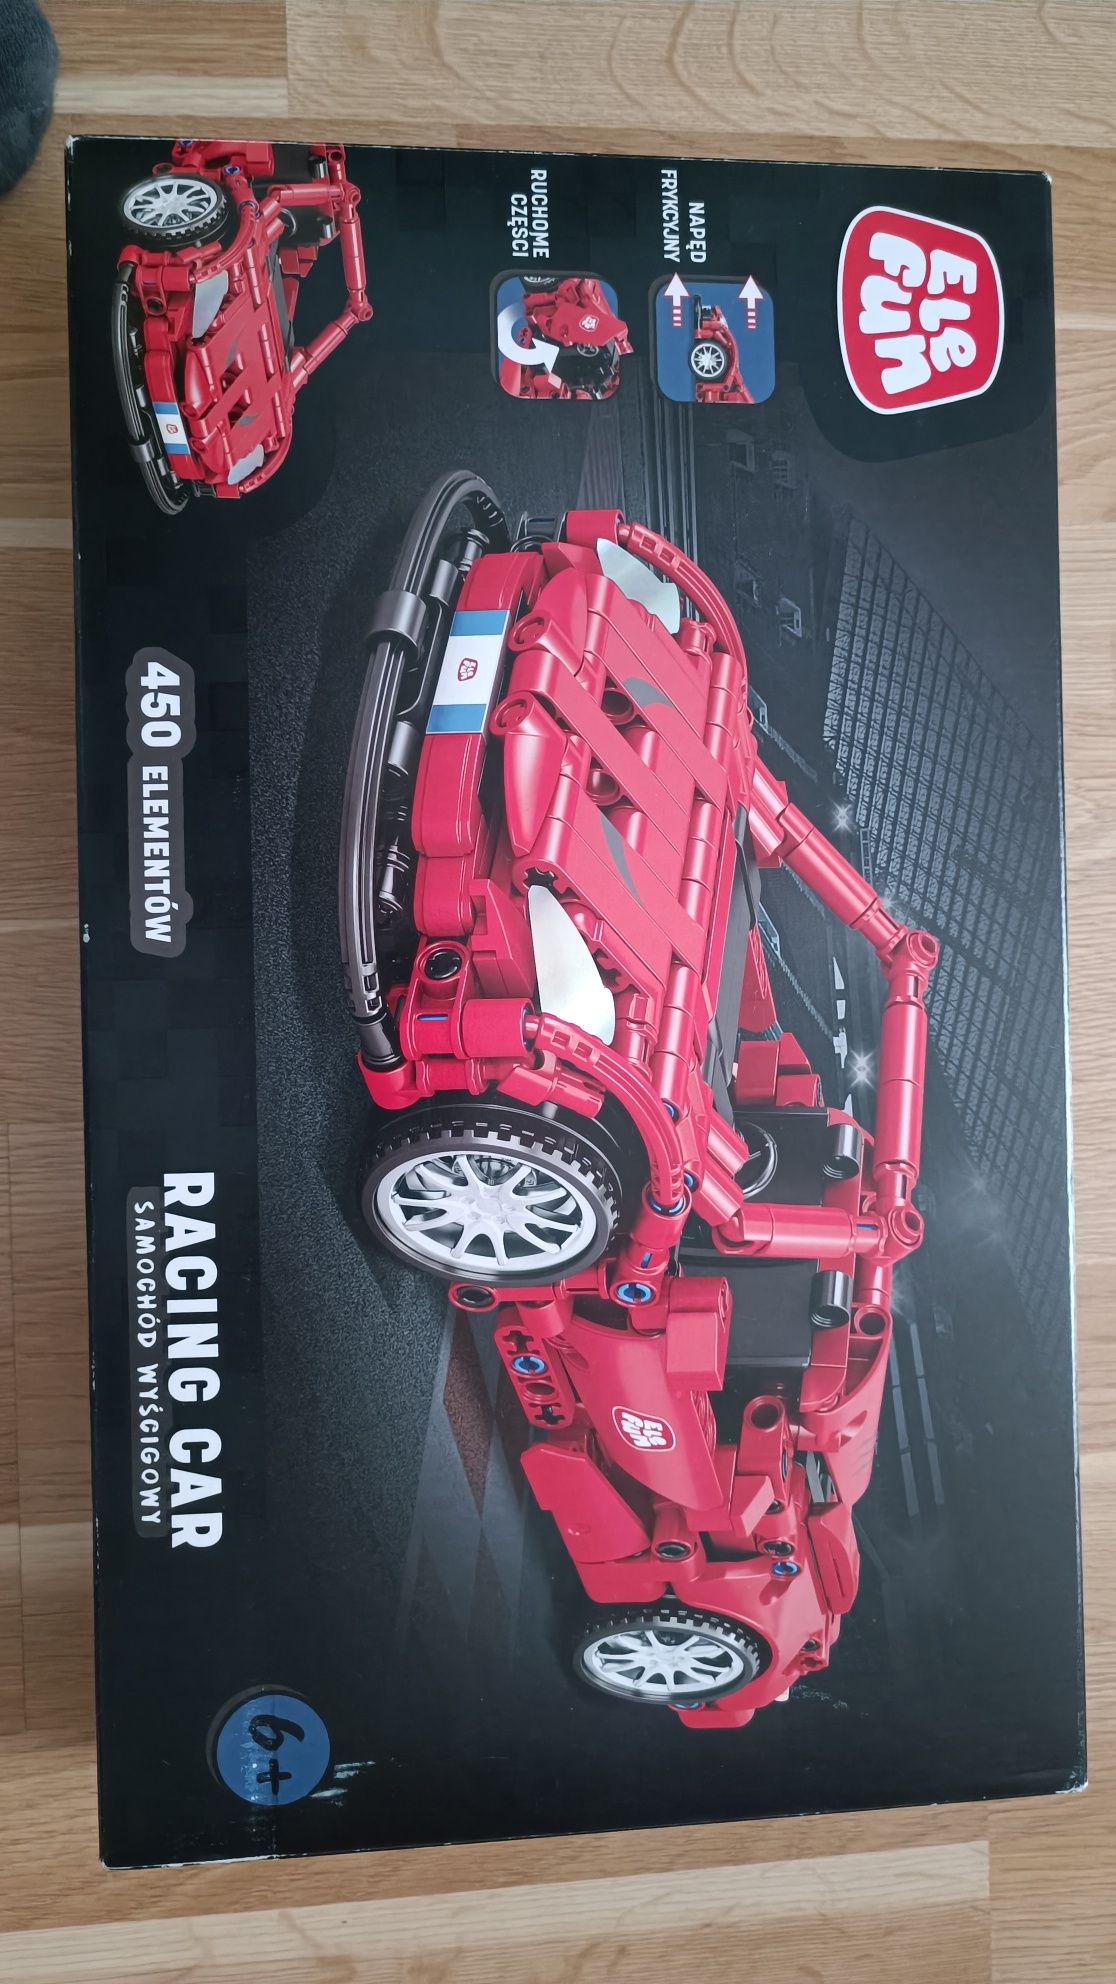 Elefun Race Car Blocks 450 елементів (LEGO) конструктор